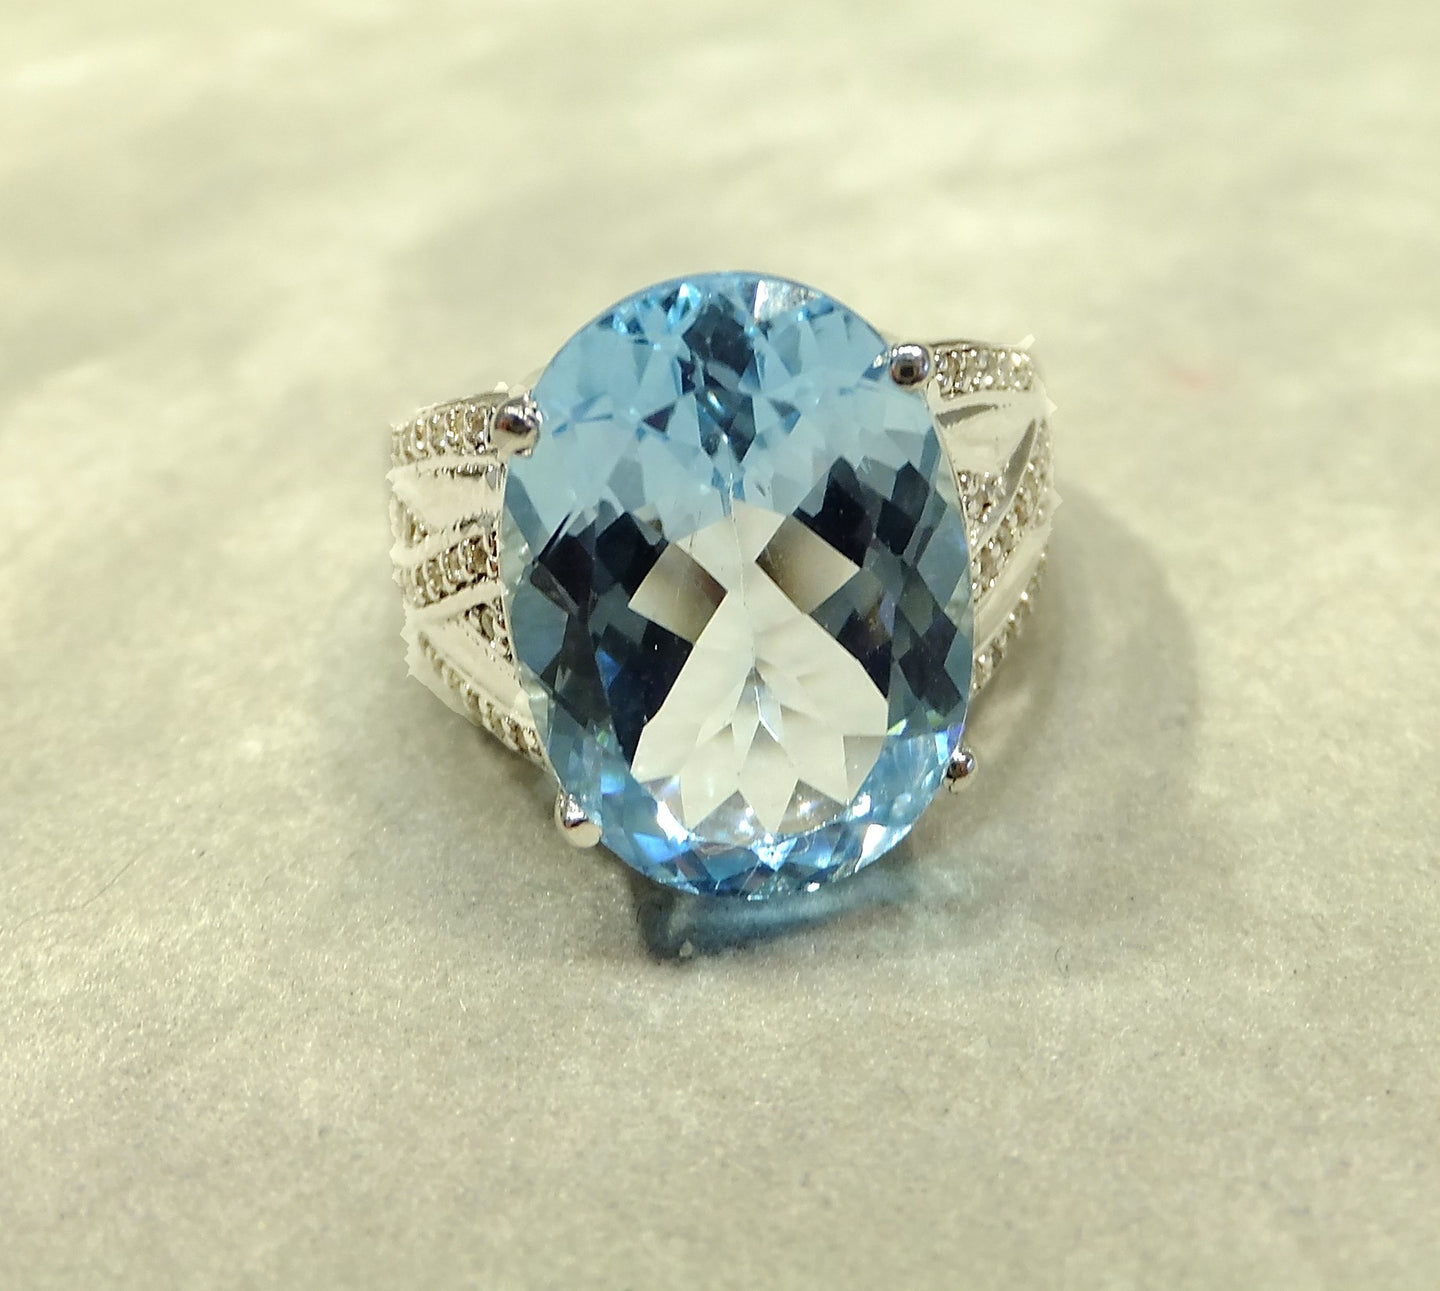 Oval Blue topaz gemstone ring in sterling silver